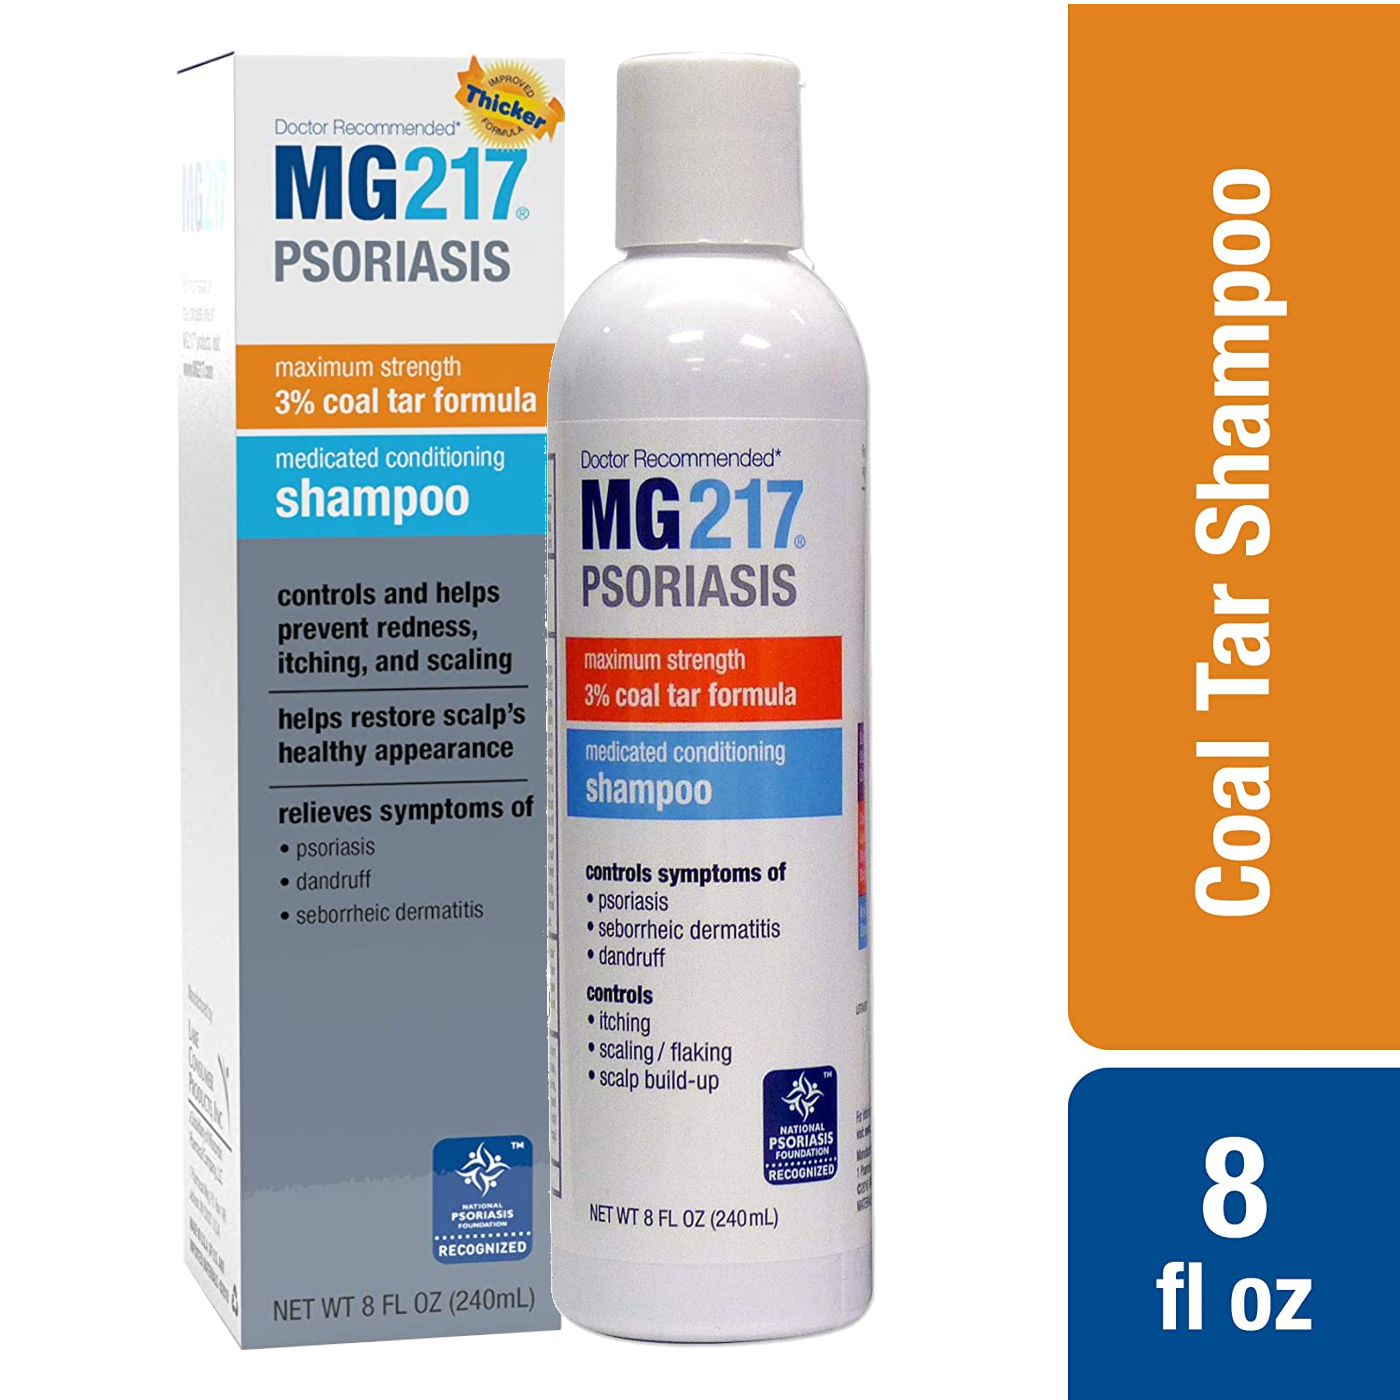 MG217 Psoriasis Medicated Conditioning 3% Coal Tar Shampoo, 8 Fl.